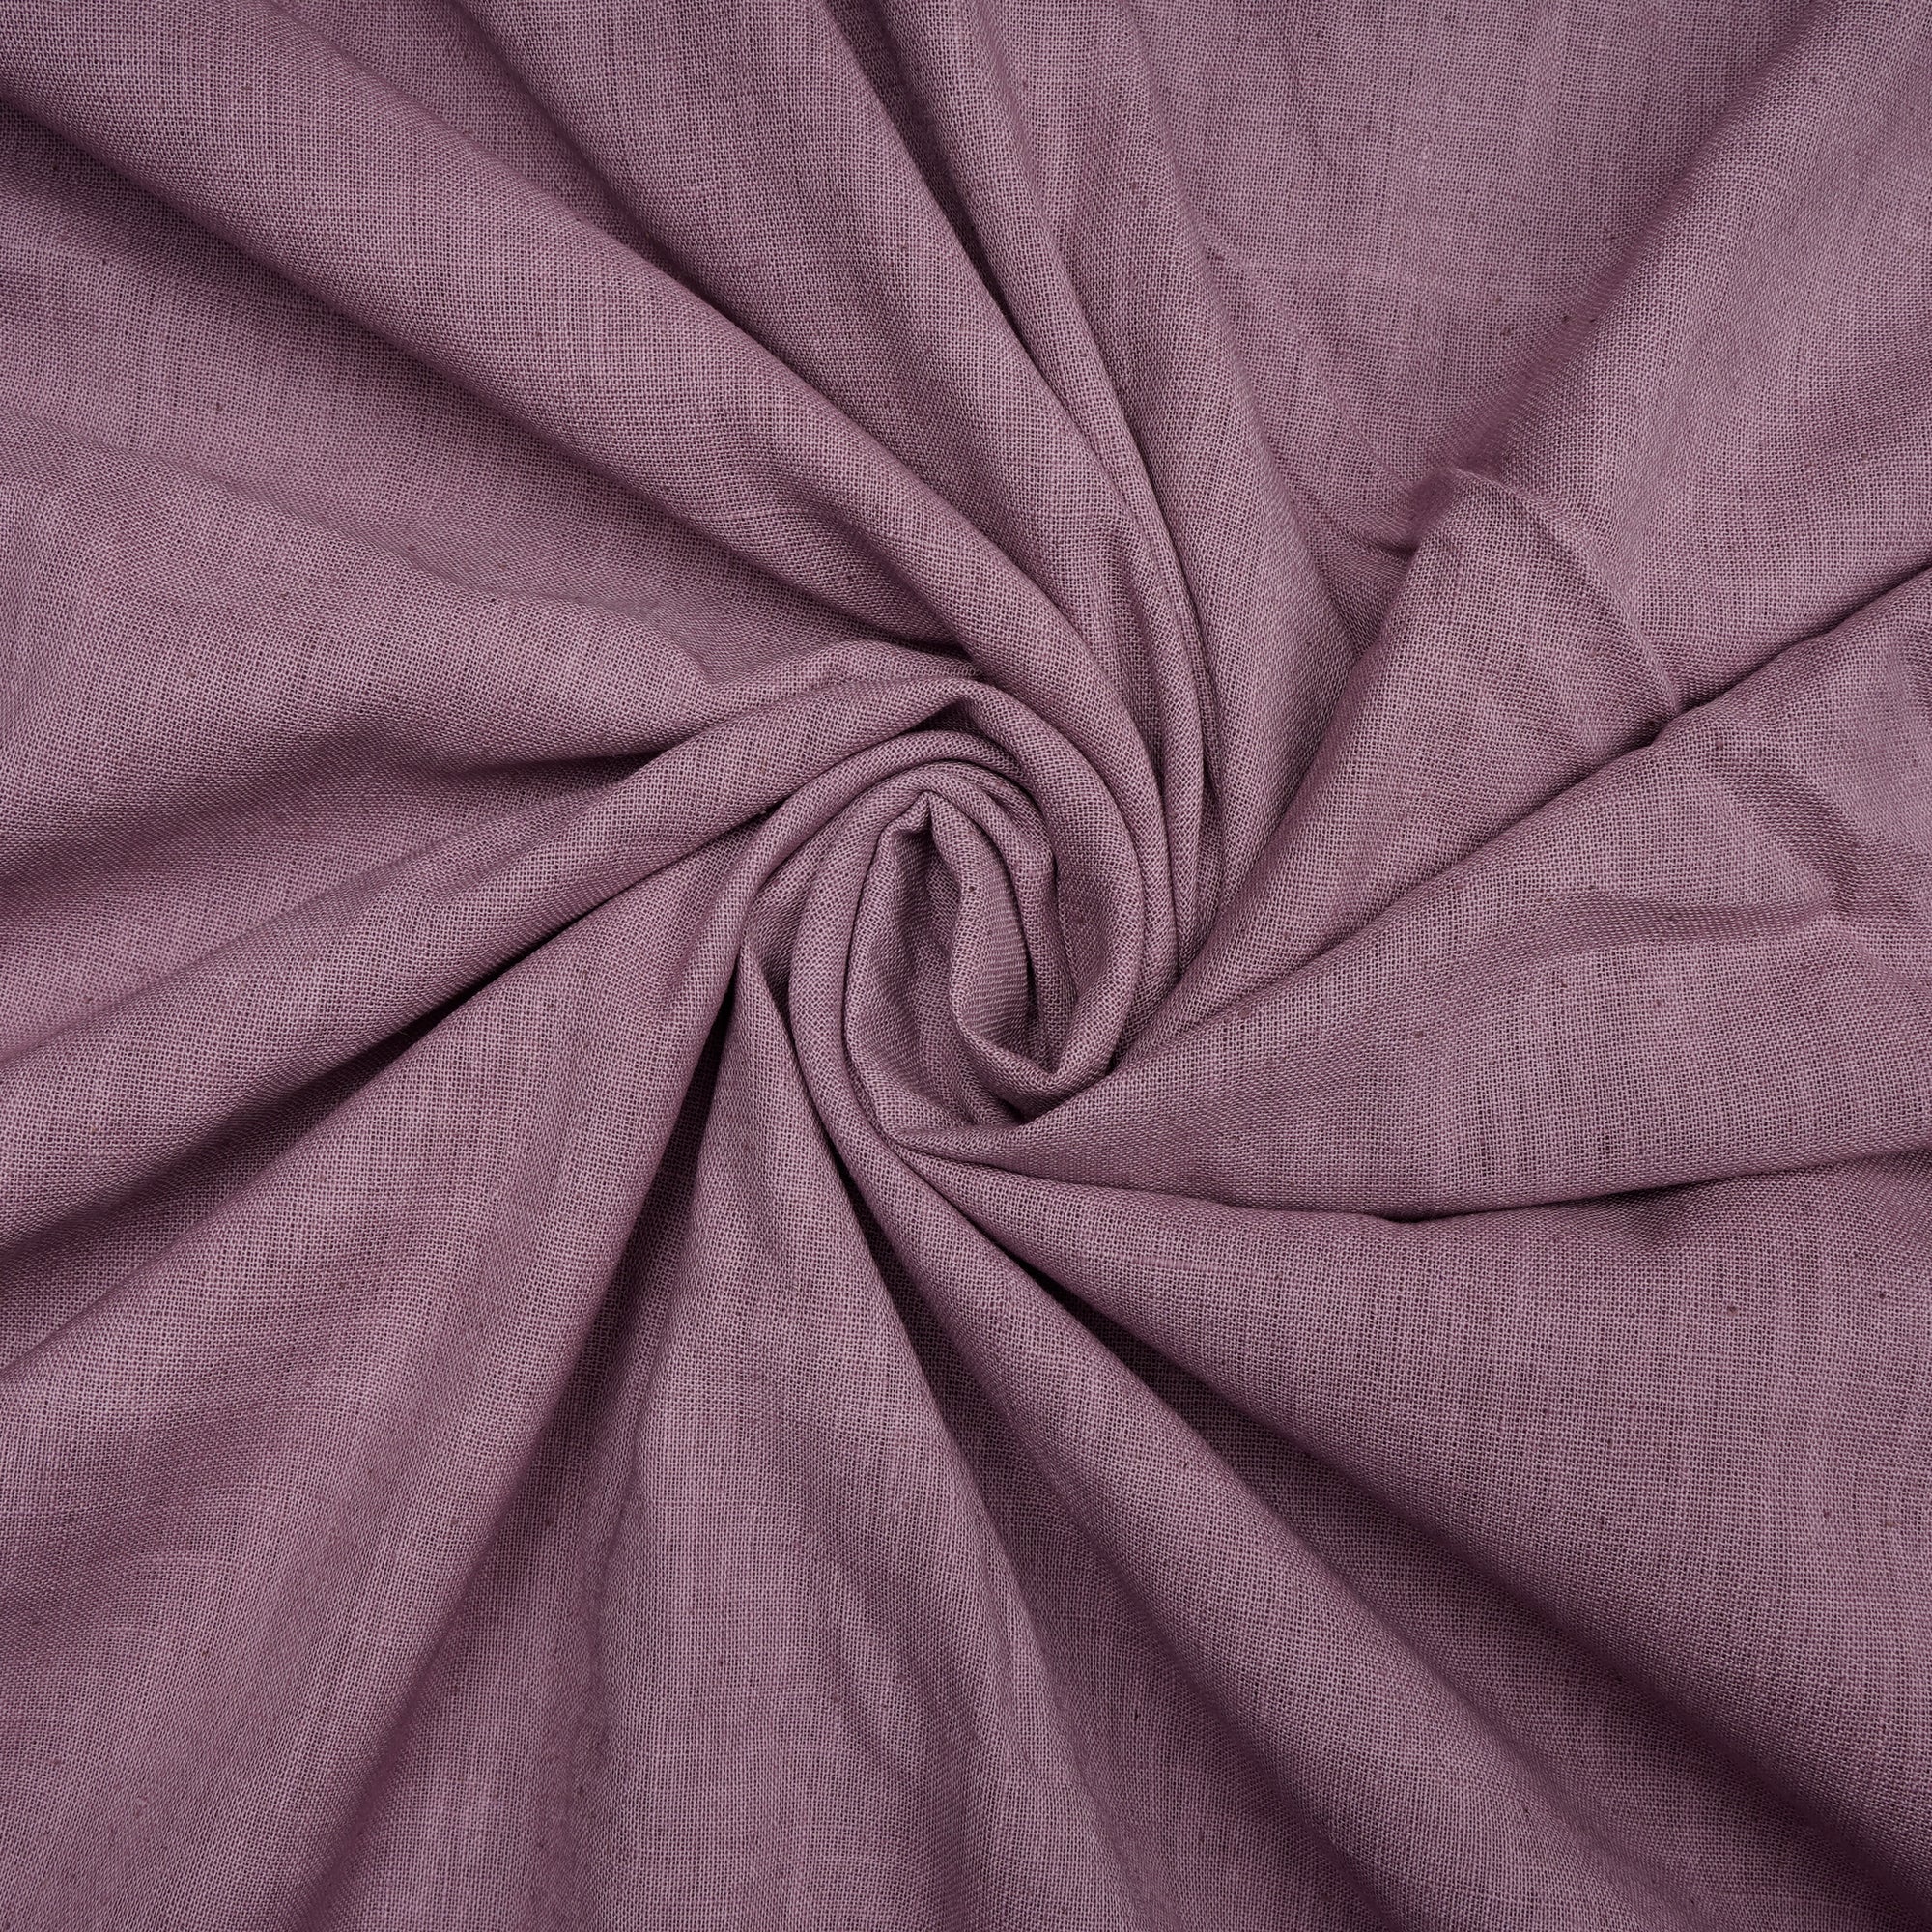 Mauve Shadows 40's Count Piece Dyed Handspun Handwoven Cotton Fabric